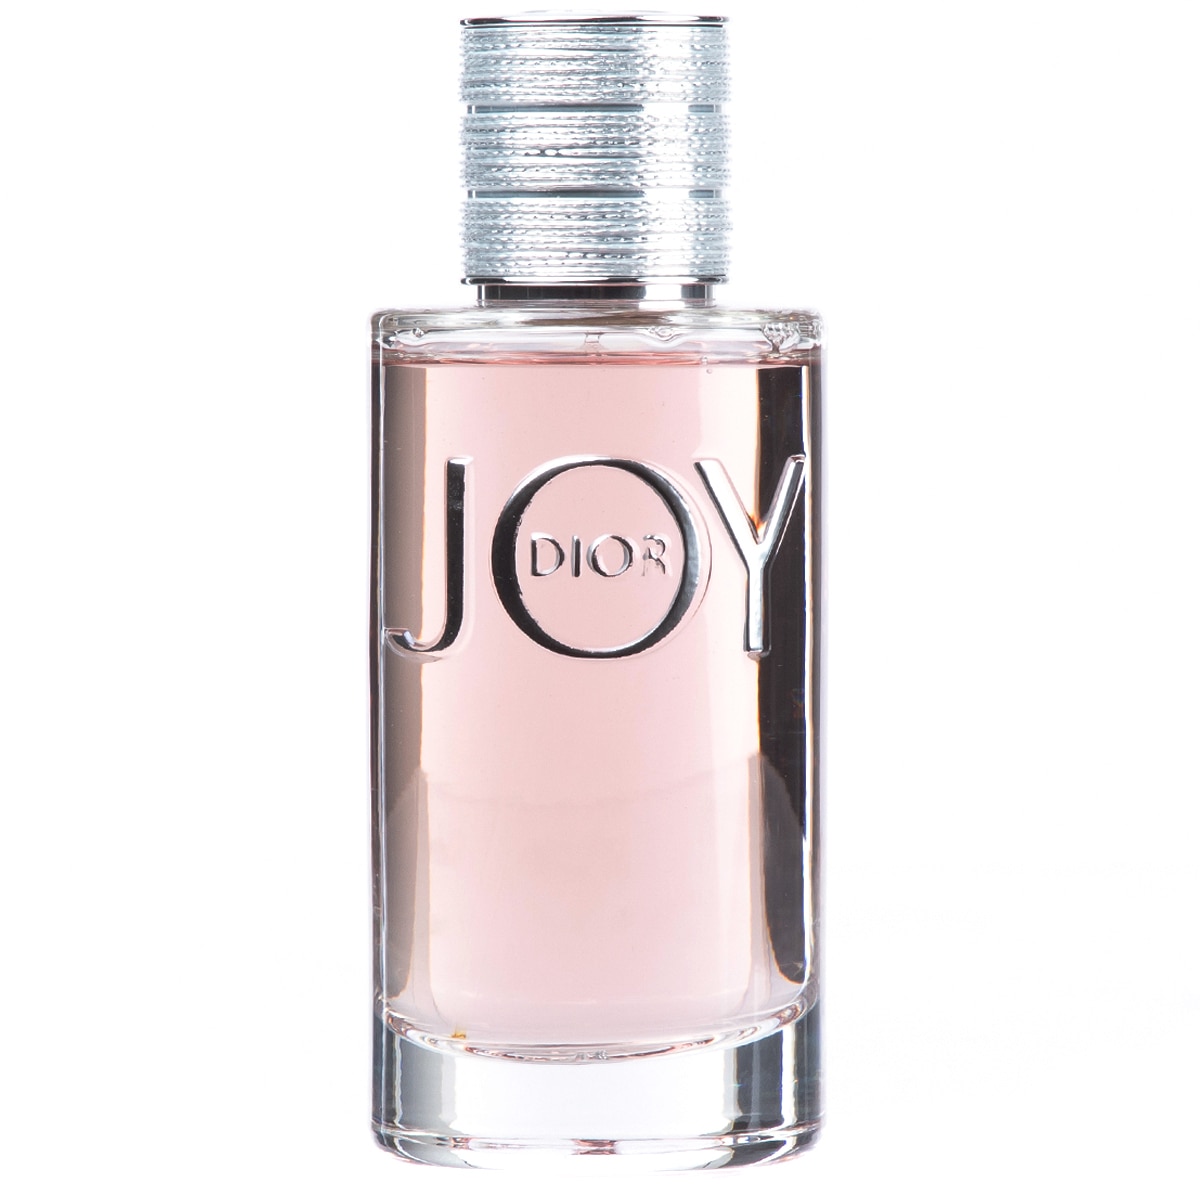 dior joy perfume 90ml